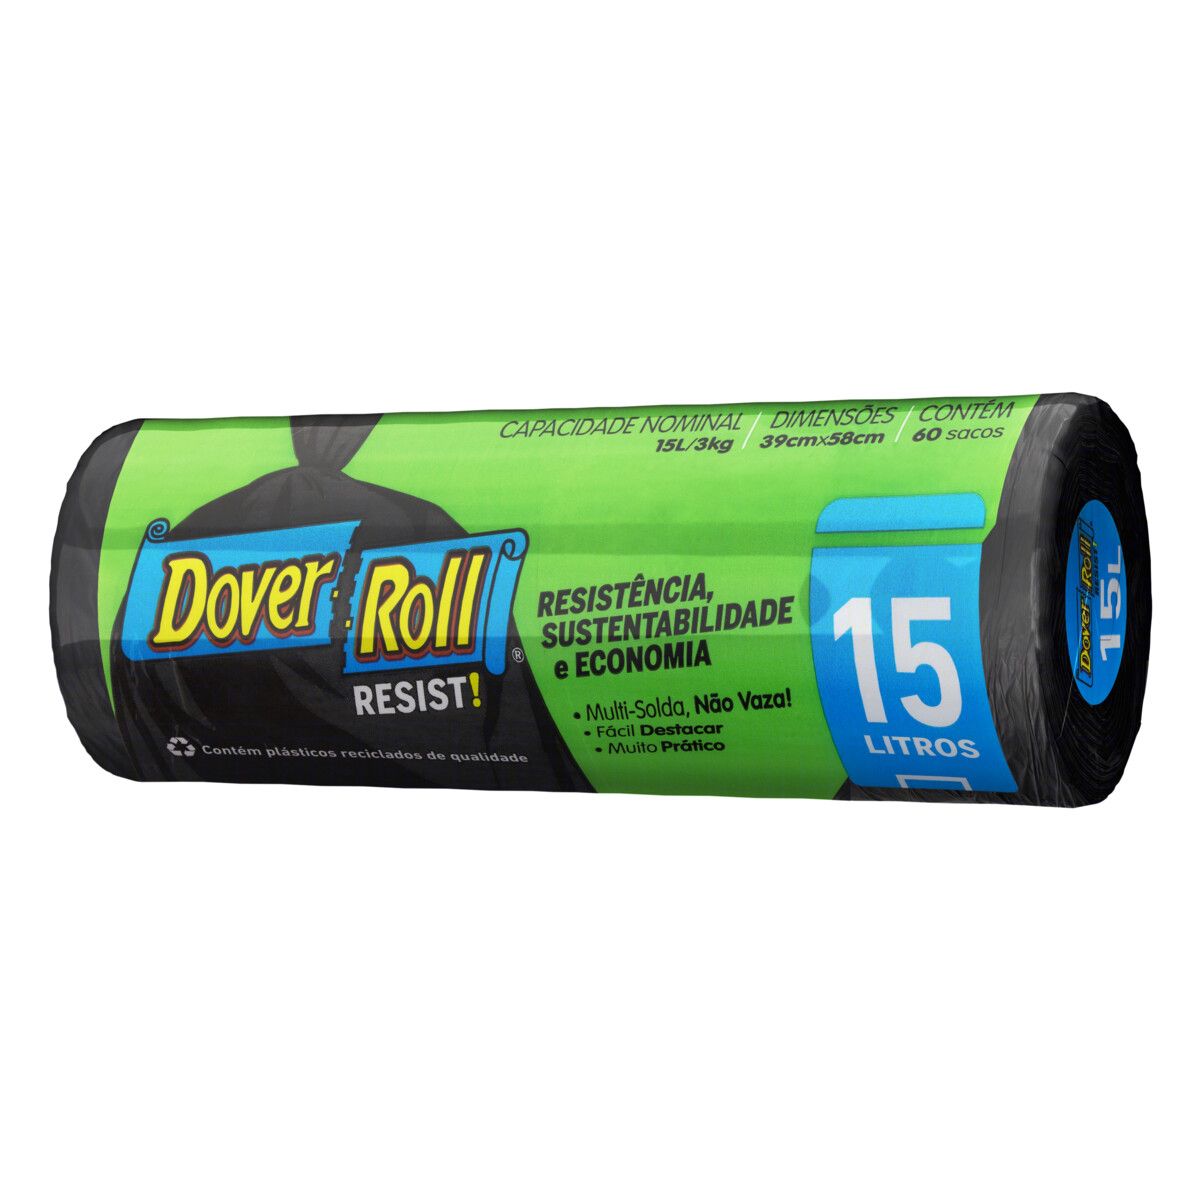 Saco para Lixo Dover Roll 15L Resist 60 Unidades image number 2